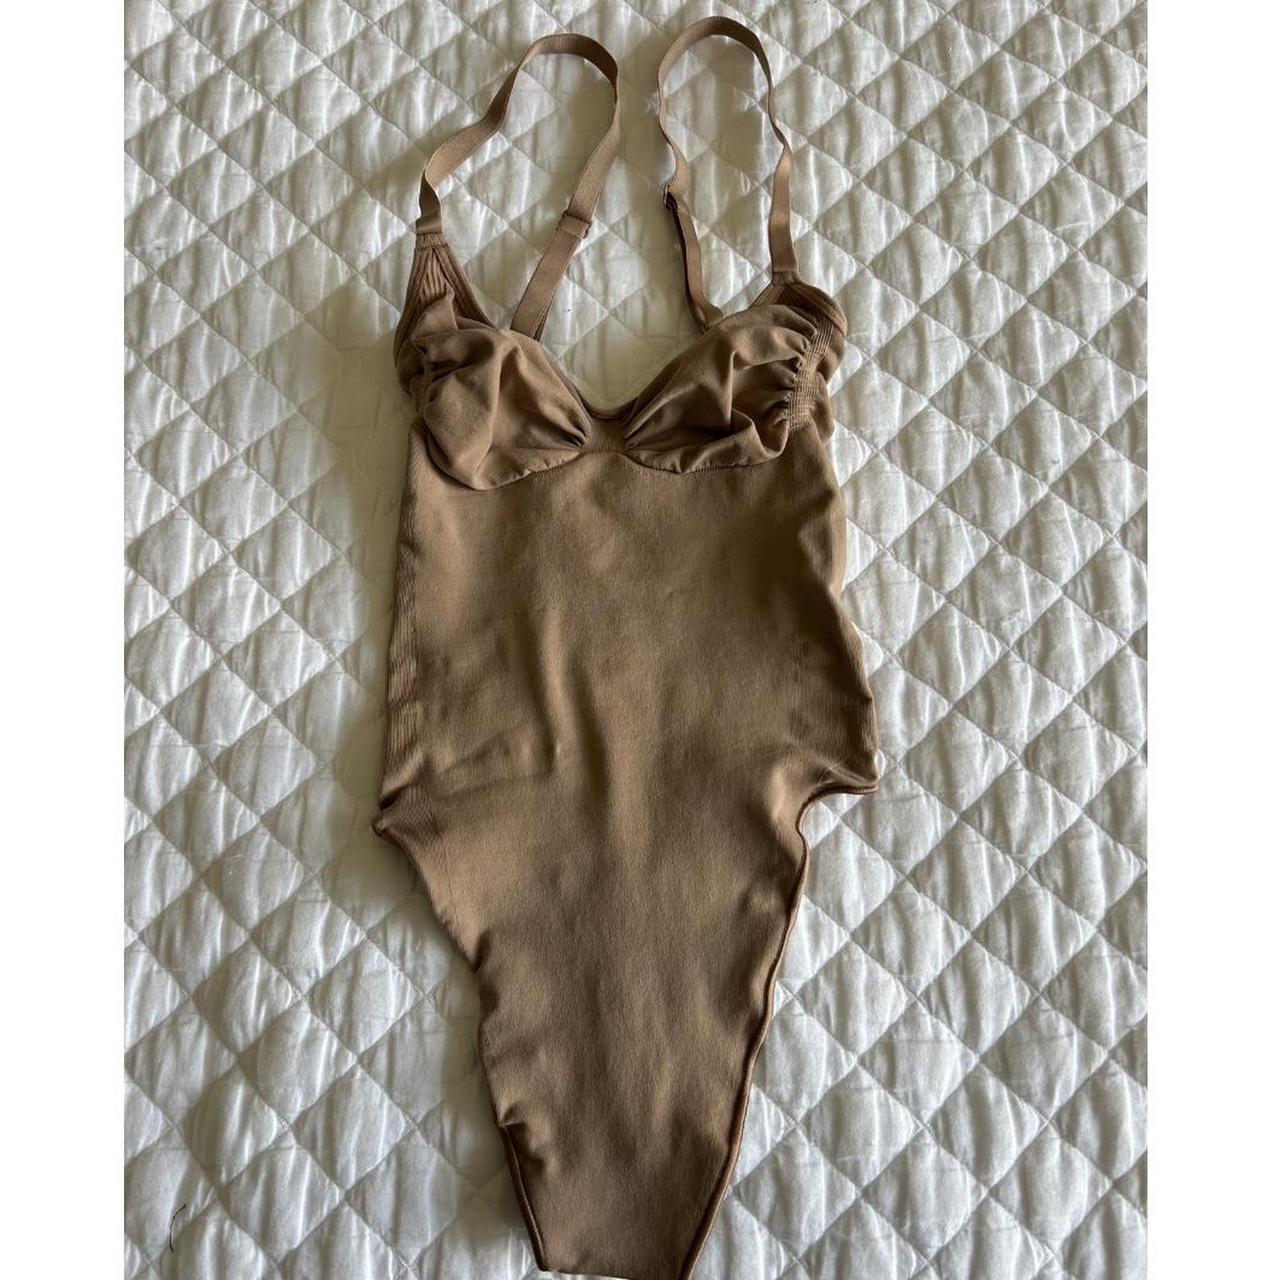 NWT sculpting bodysuit in sienna in S/M Brand new, - Depop